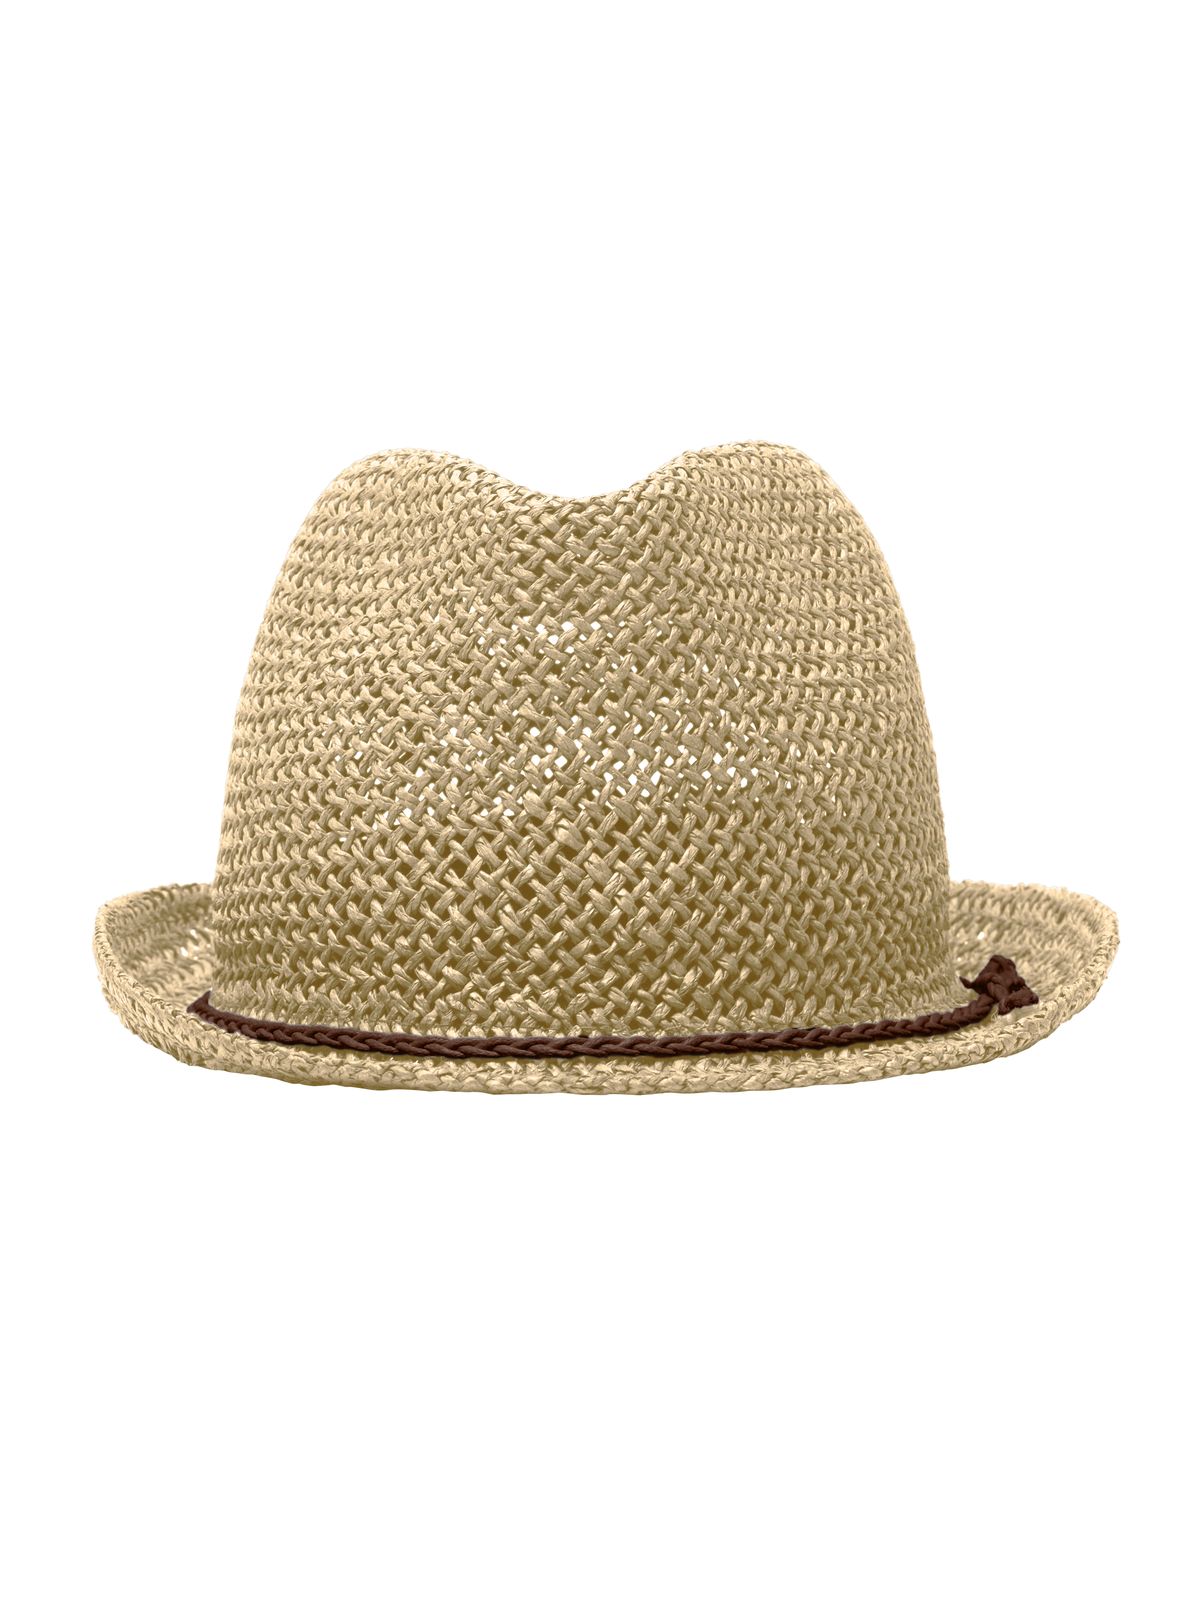 summer-hat-sand-brown.webp